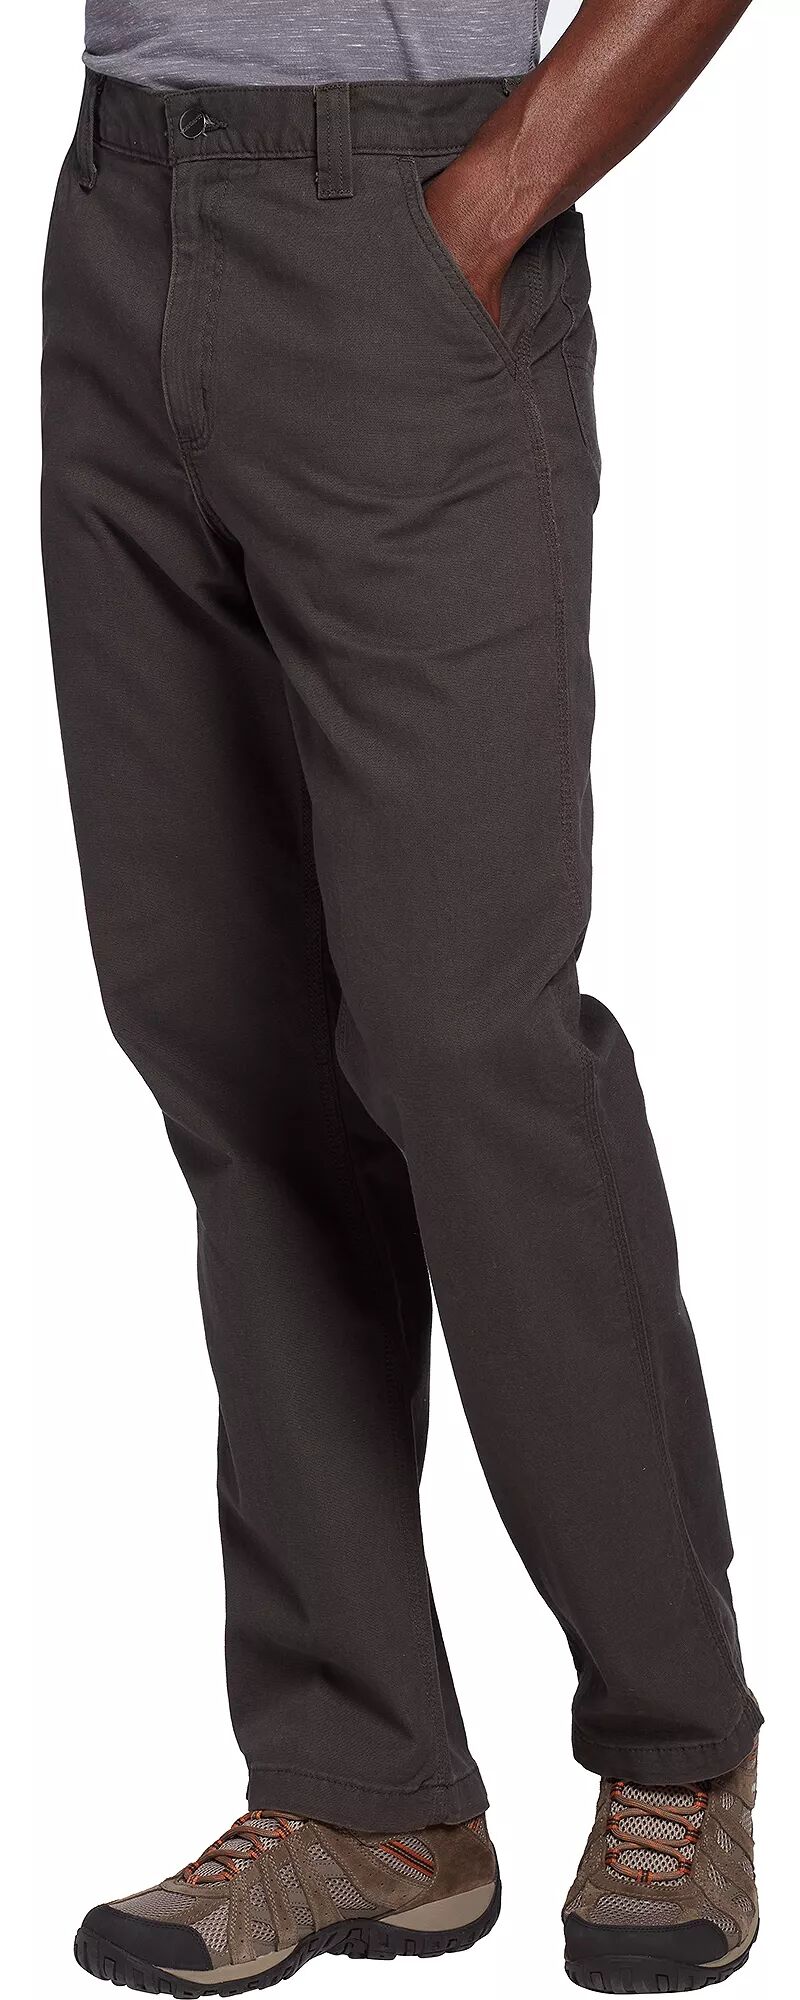 Мужские брюки-комбинезон Carhartt Rugged Flex Rigby